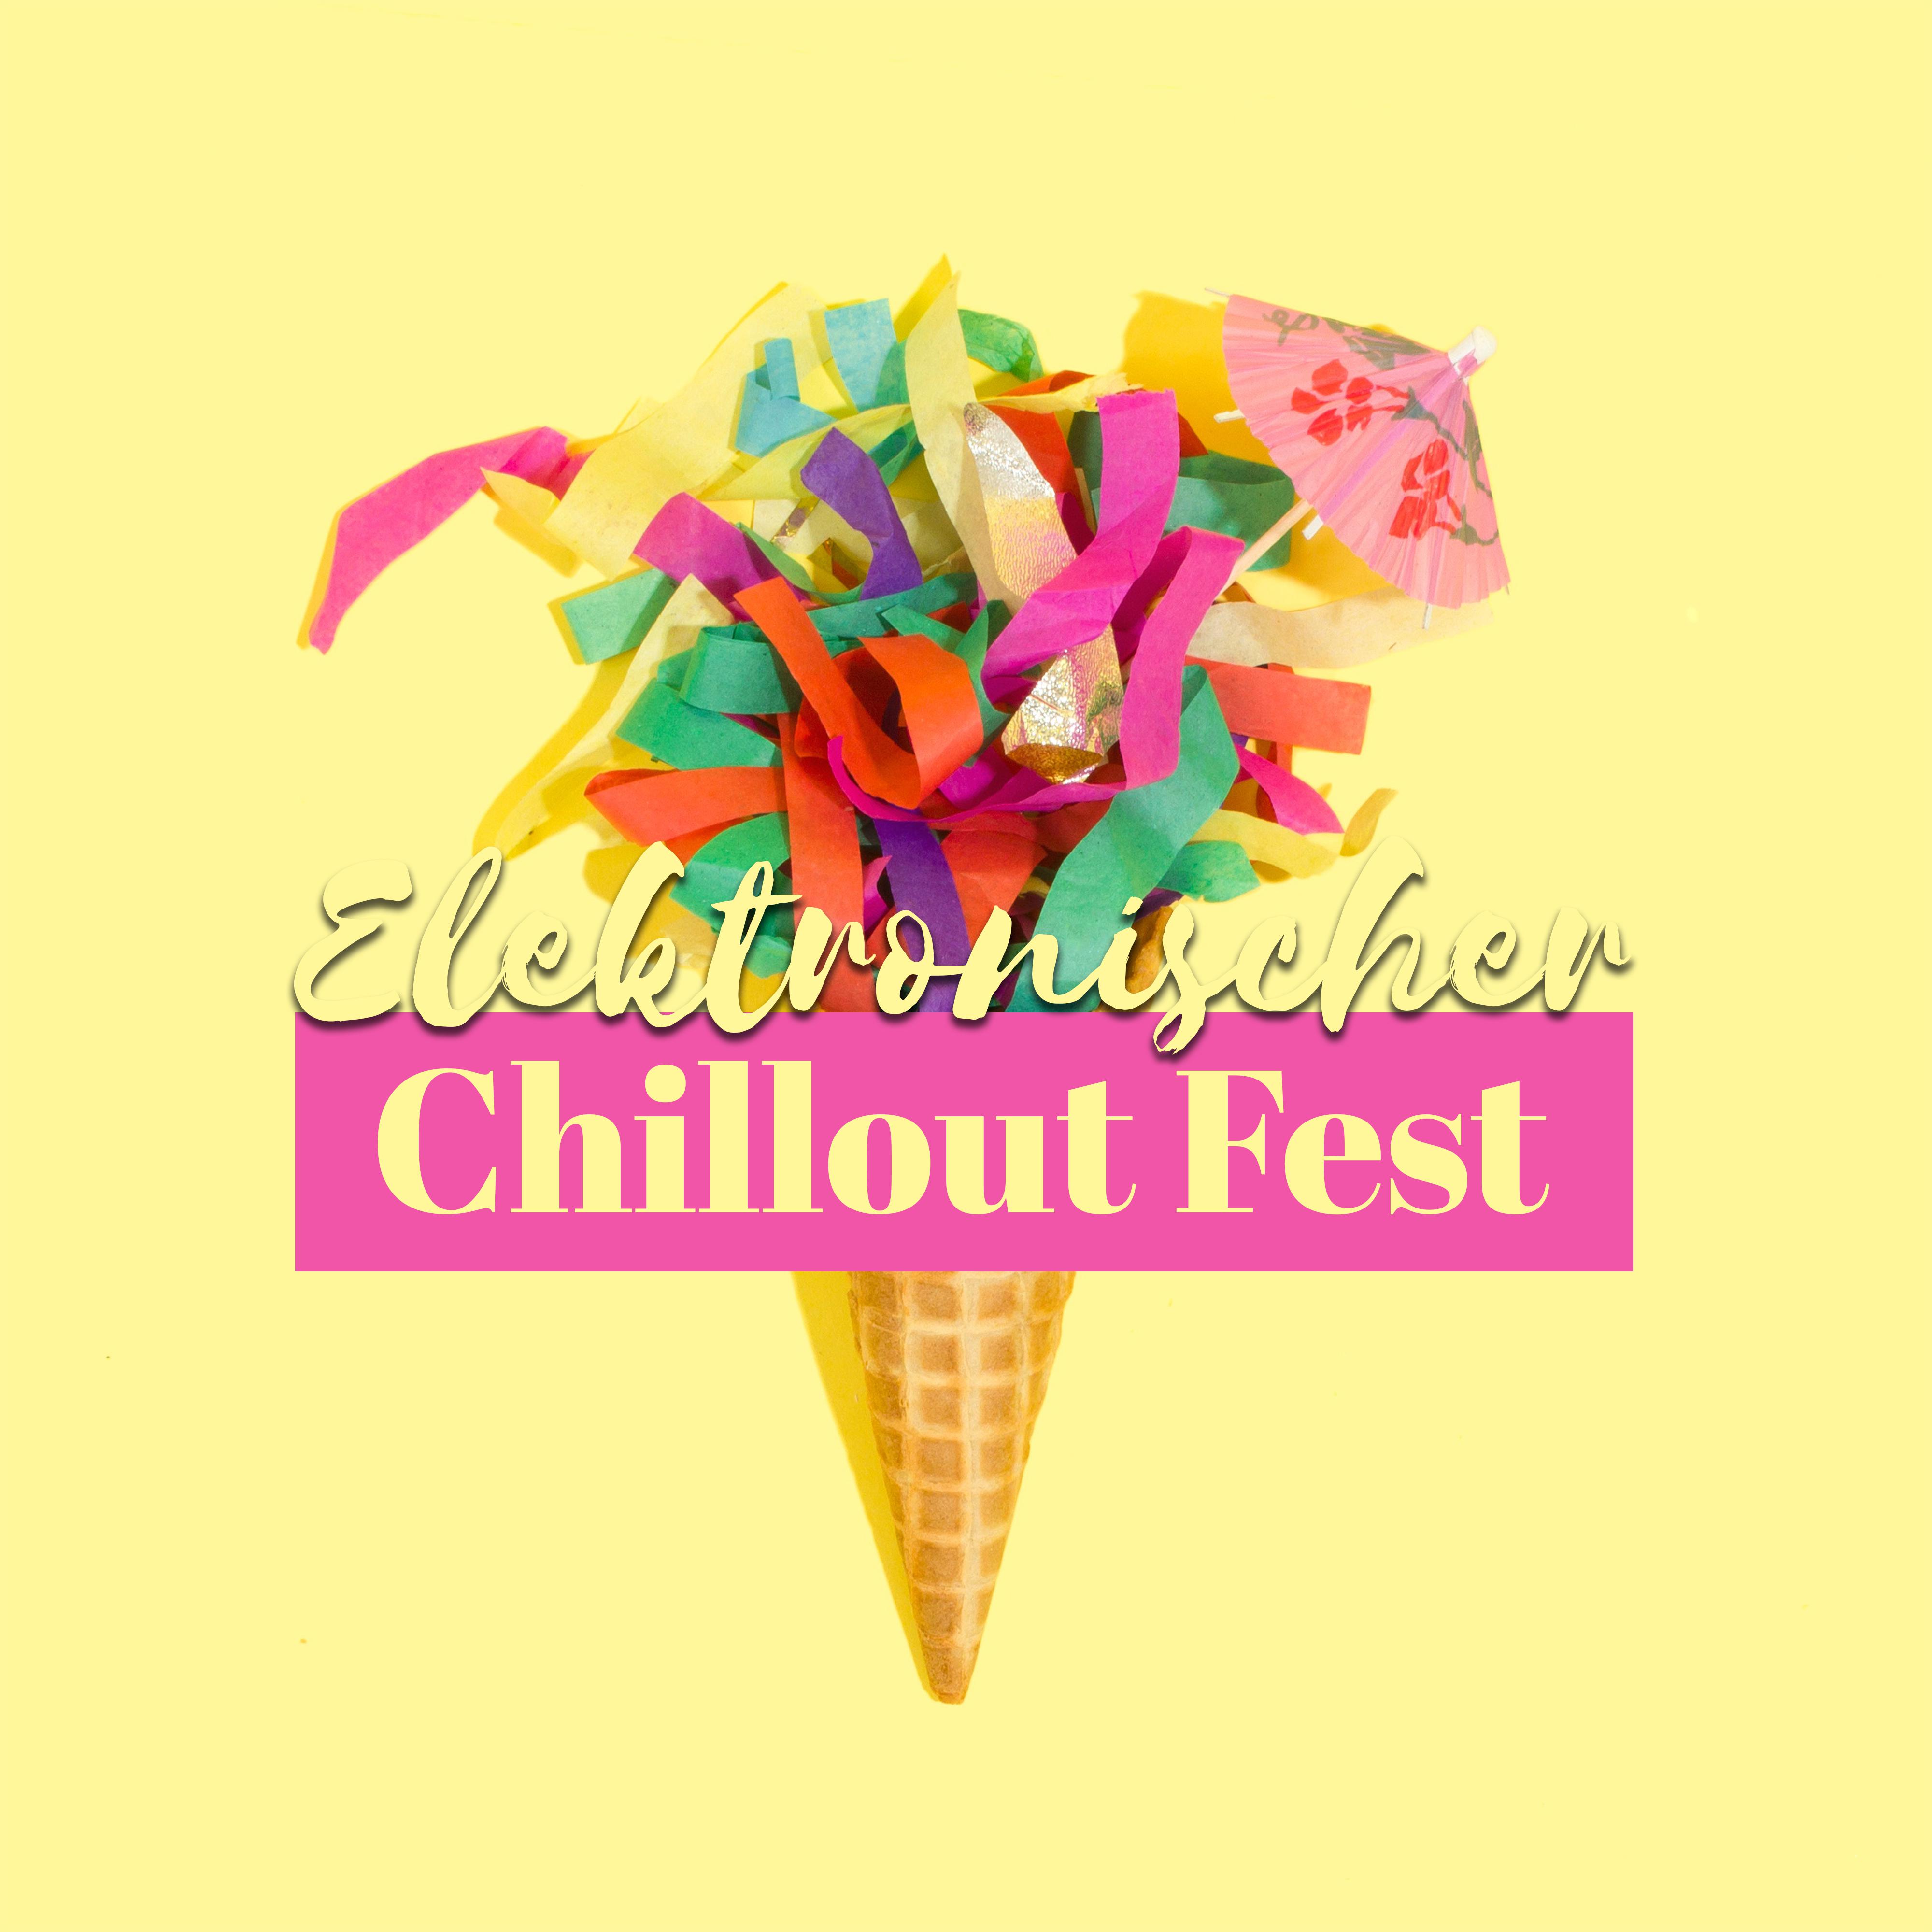 Elektronischer Chillout Fest